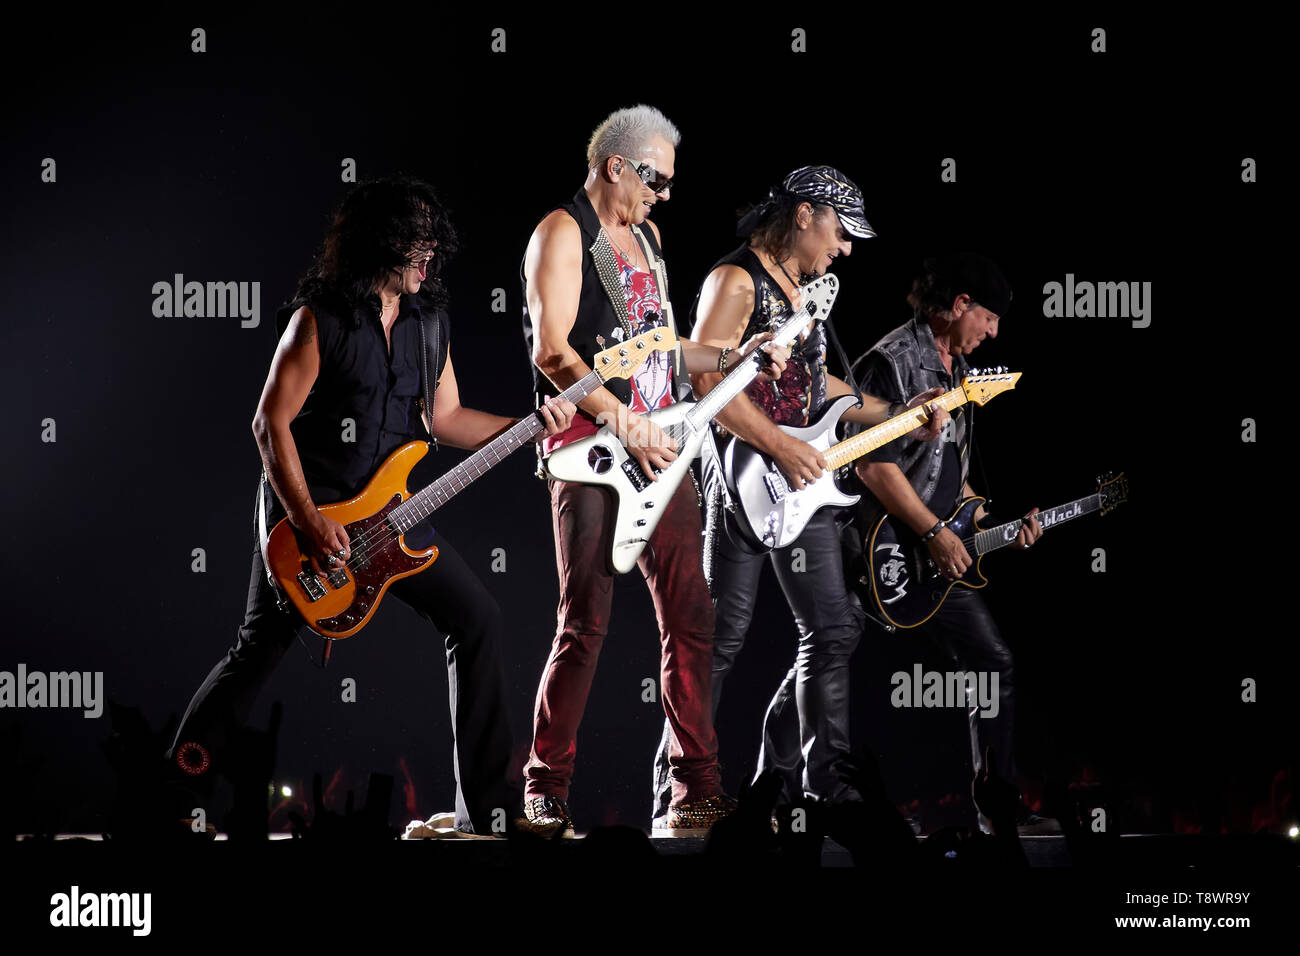 Scorpions band performing live at stadium Stock Photo - Alamy